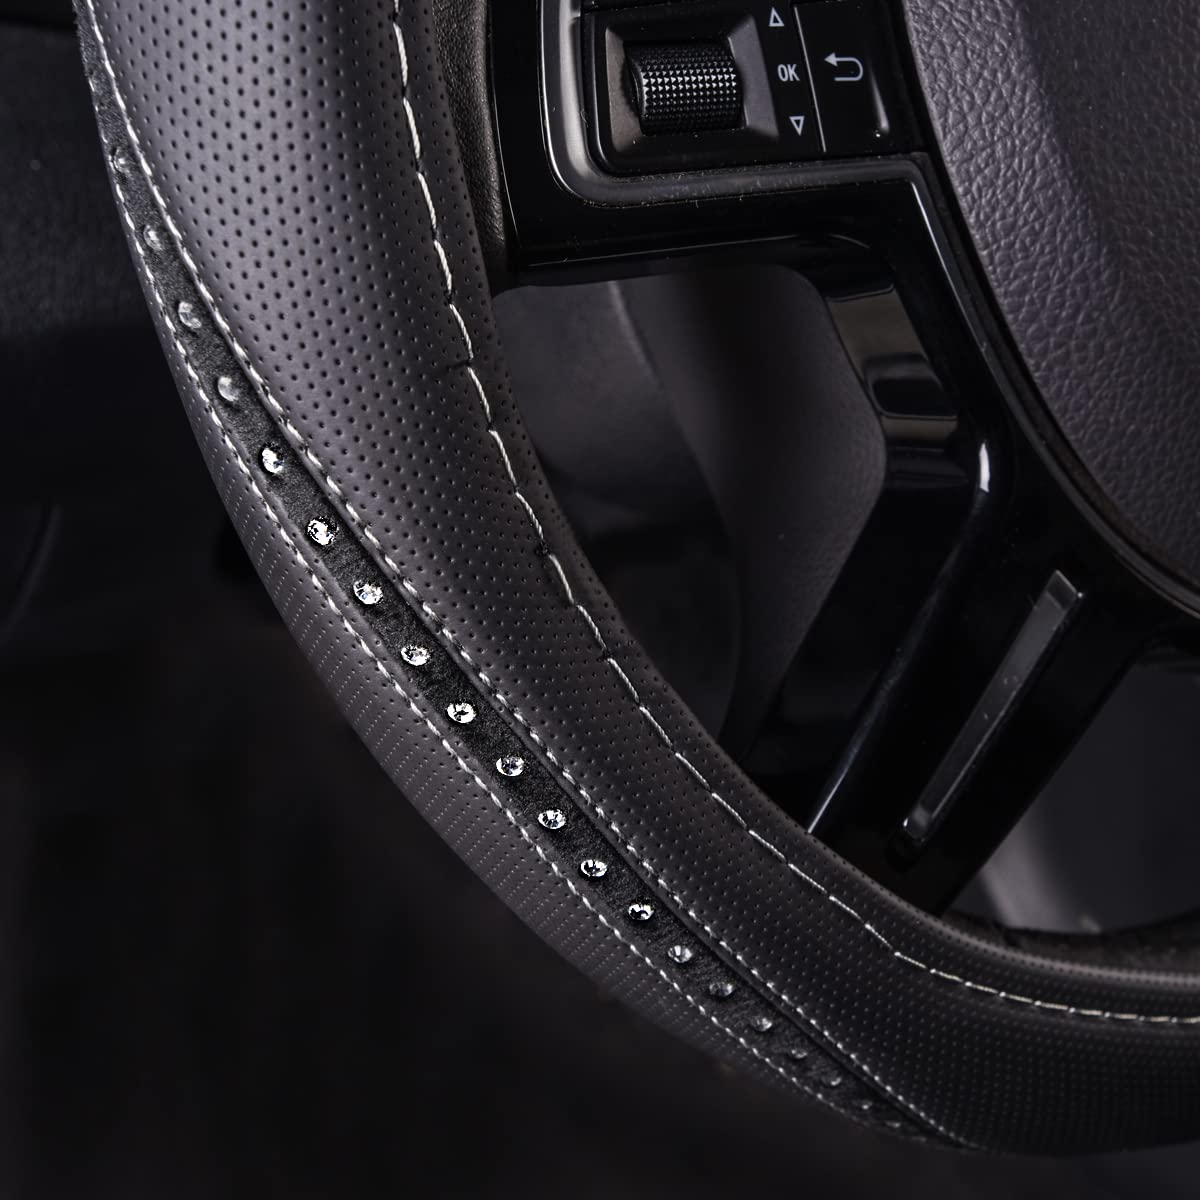 Pretty Rhinestone Leather Universal Steering Wheel Cover,Fit for Car, Suvs,Sedans,Truck-silver